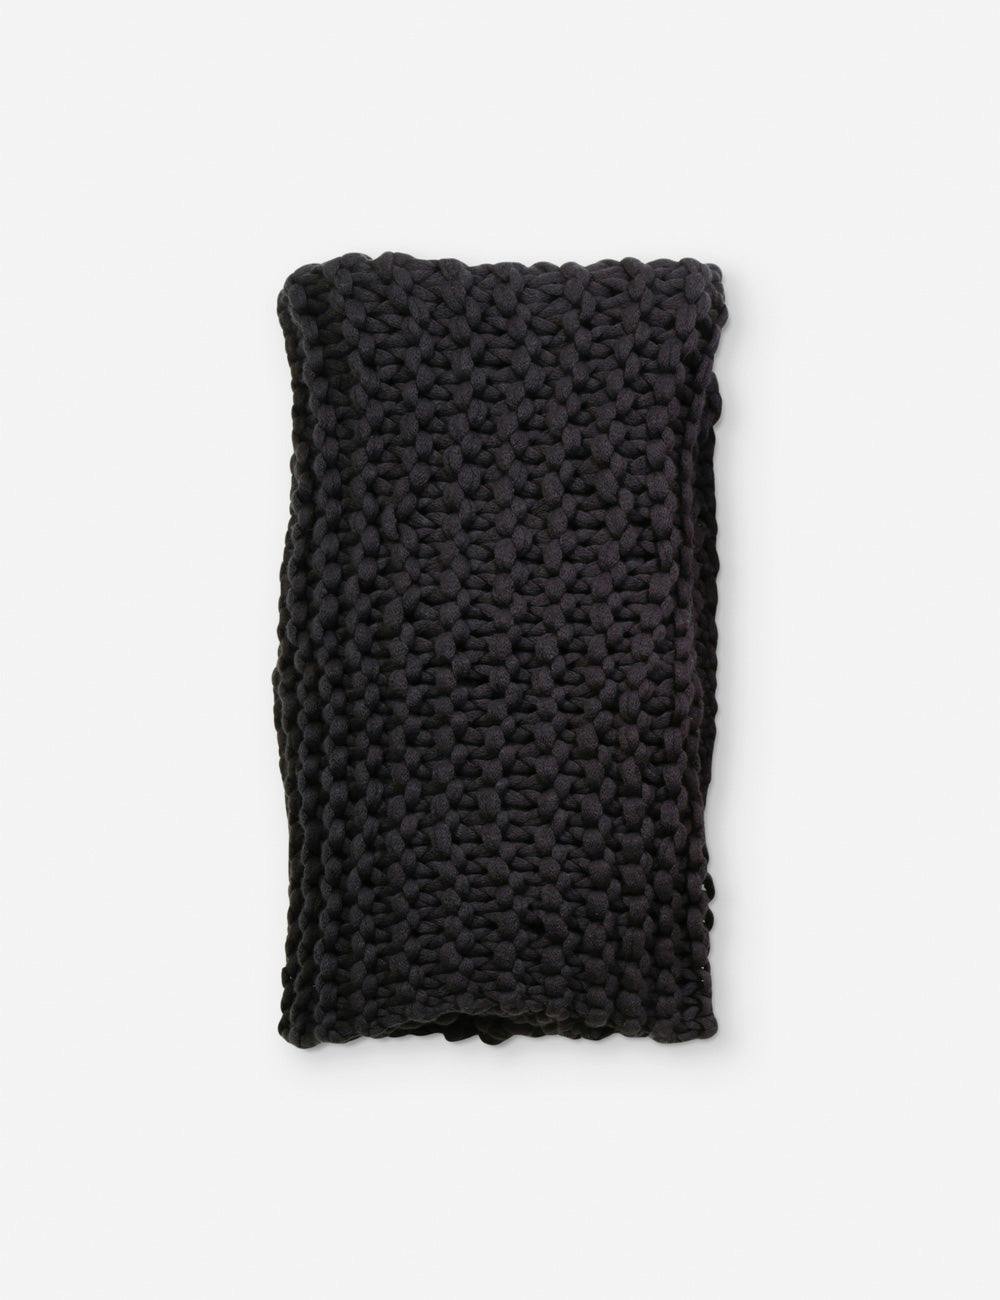 Finn Midnight 60'' x 50'' Organic Hand-Knit Reversible Throw